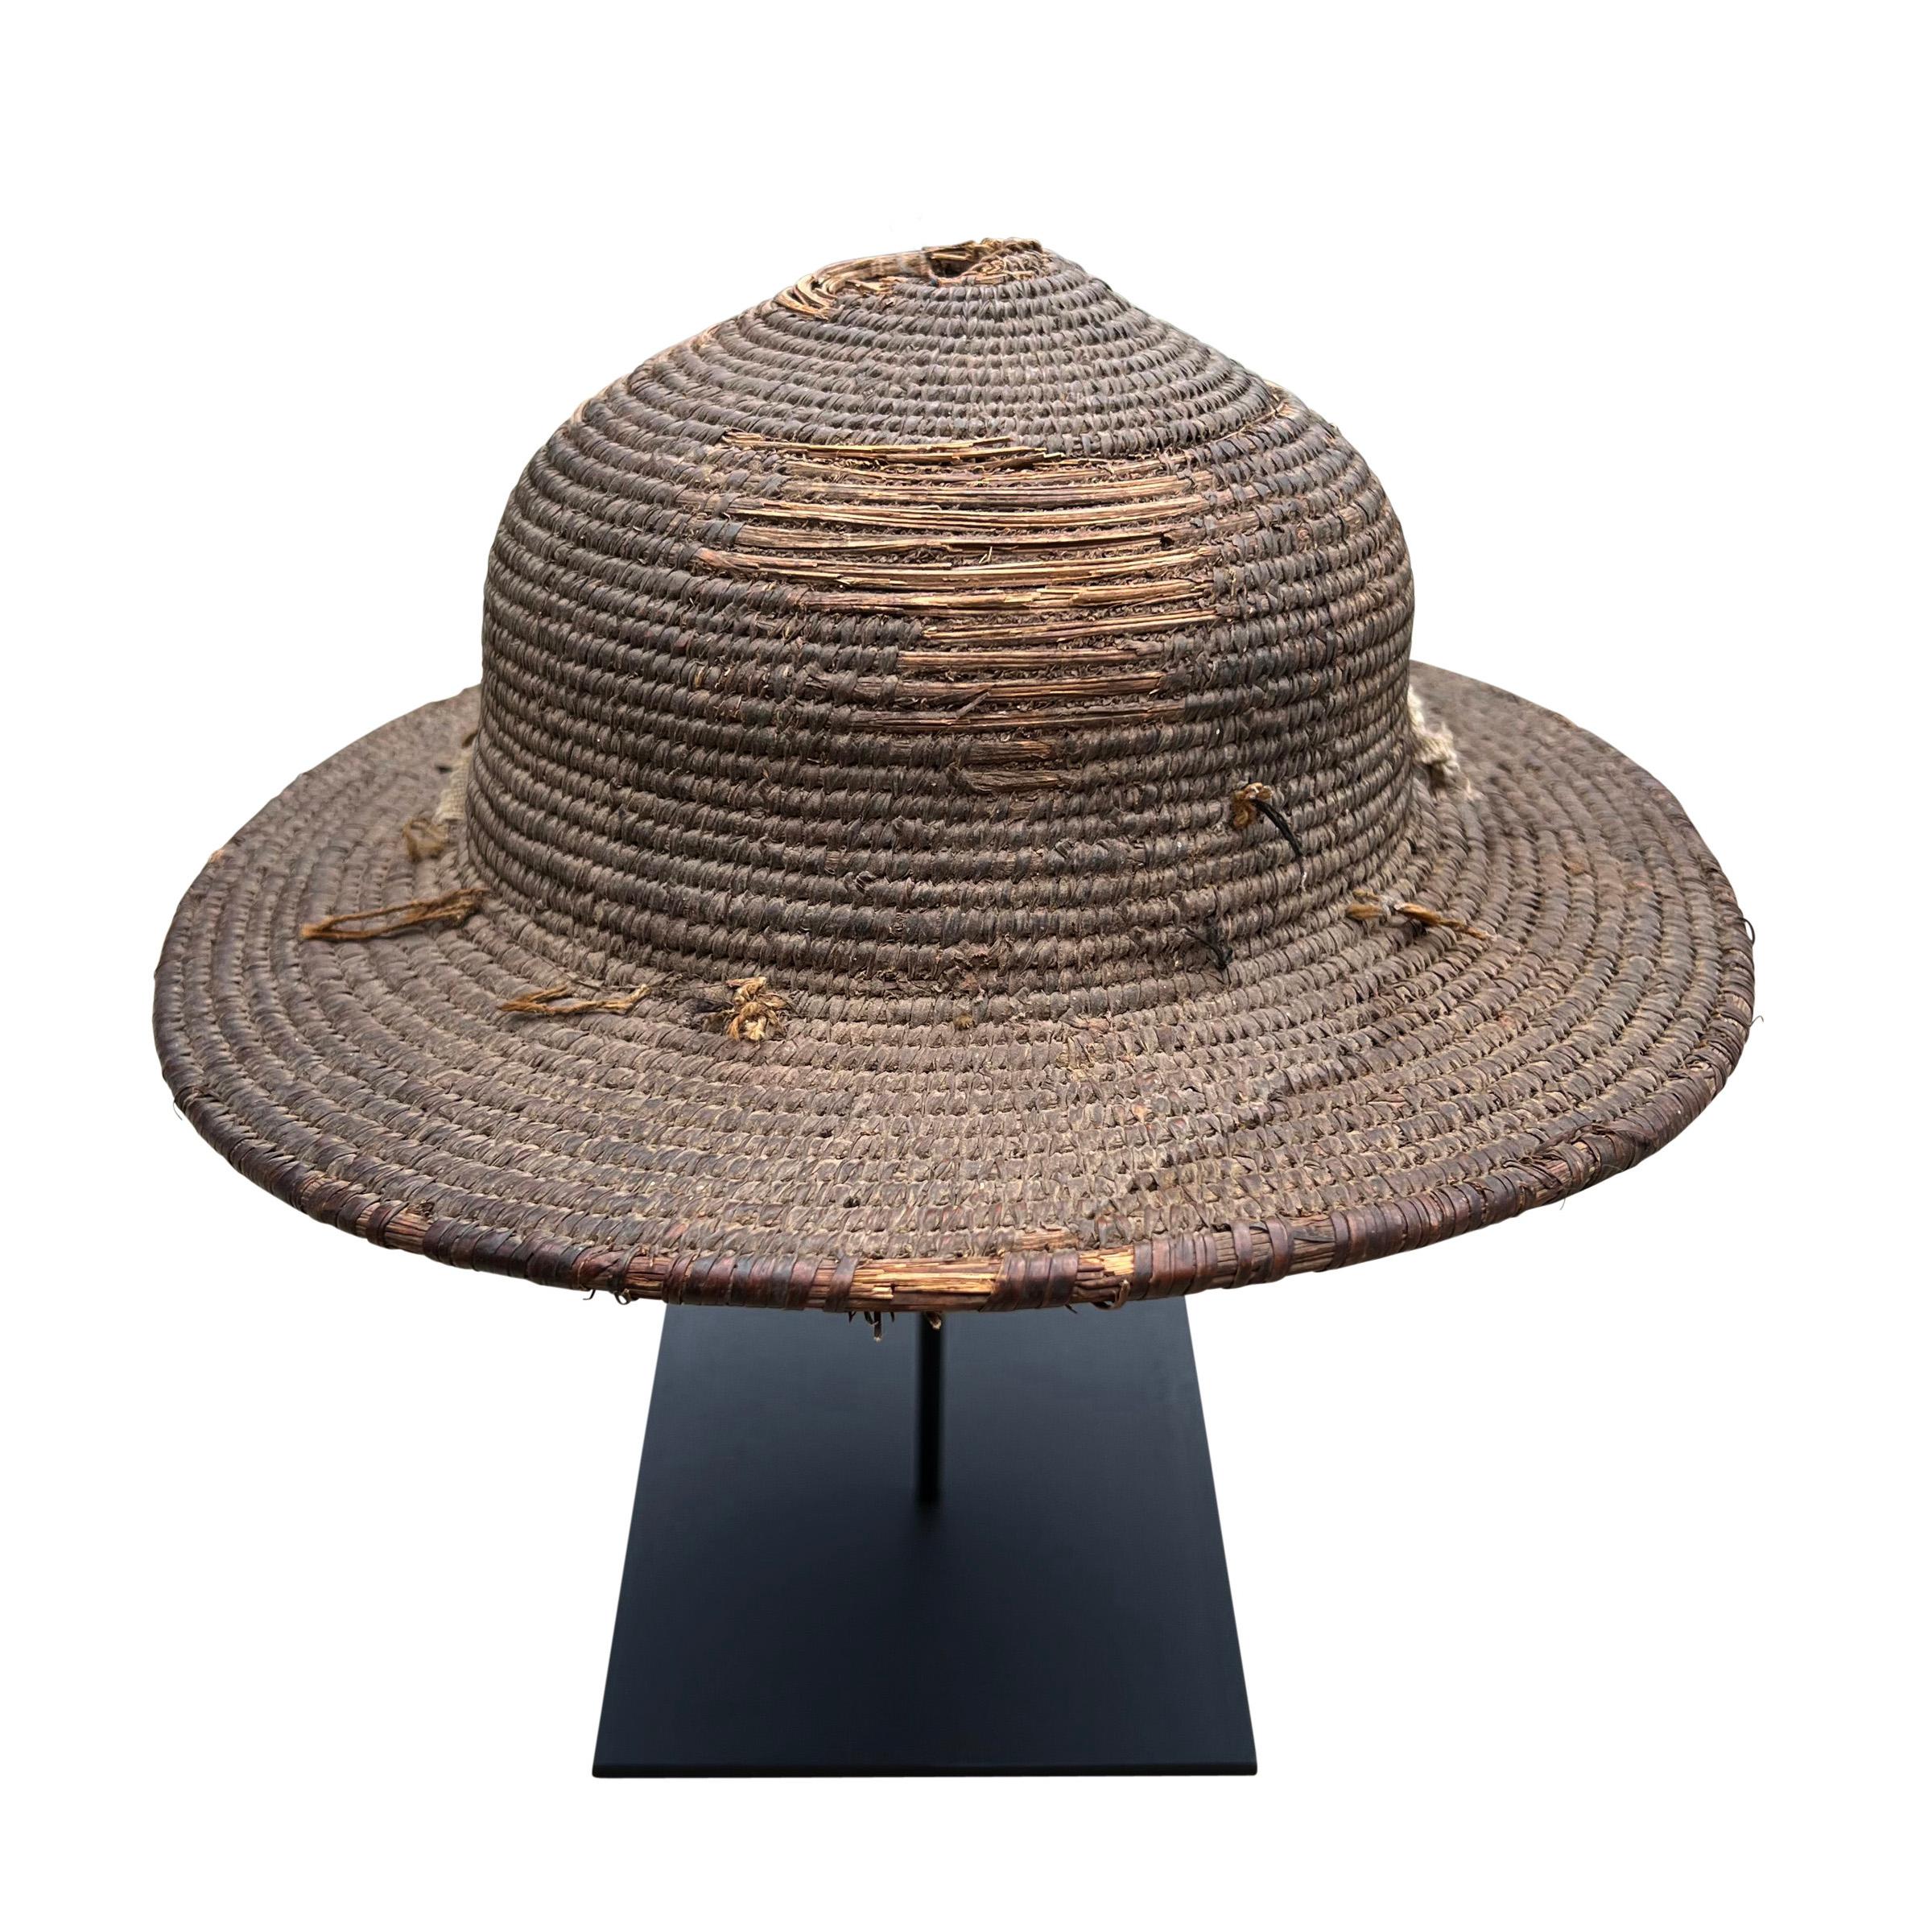 Tribal 20th Century Nigerian Woven Hat on Custom Mount